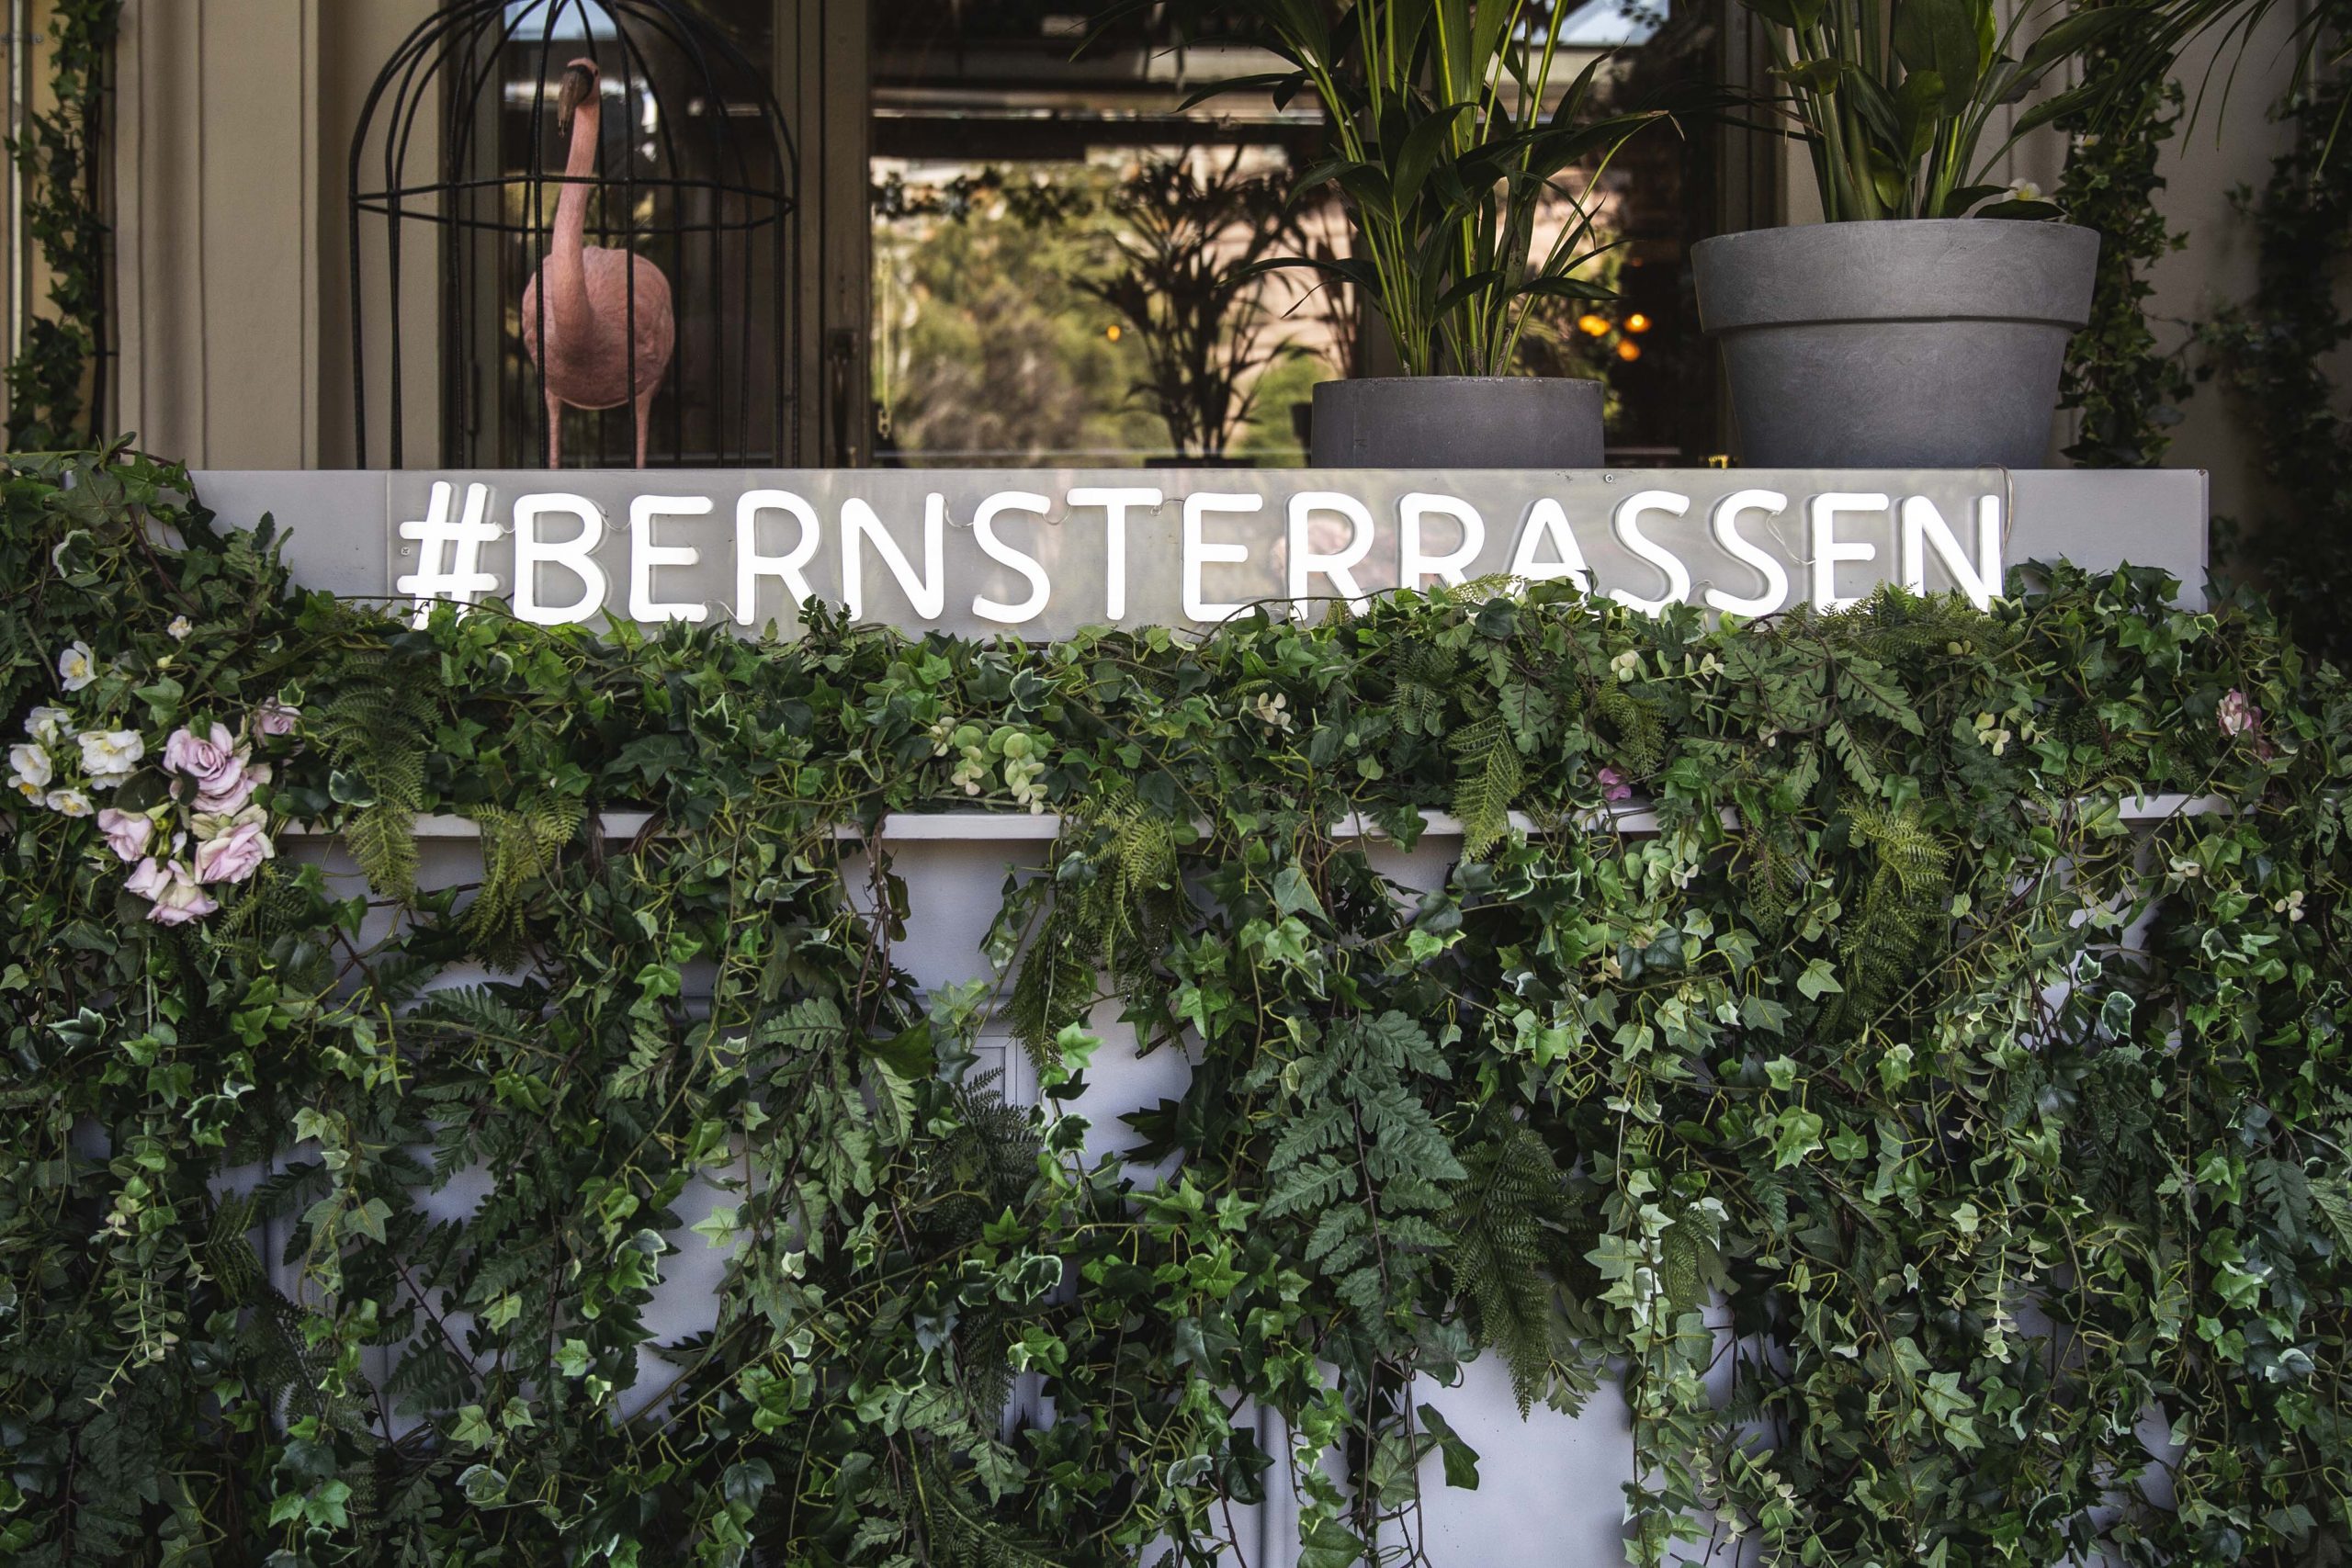 Berns Terrassen